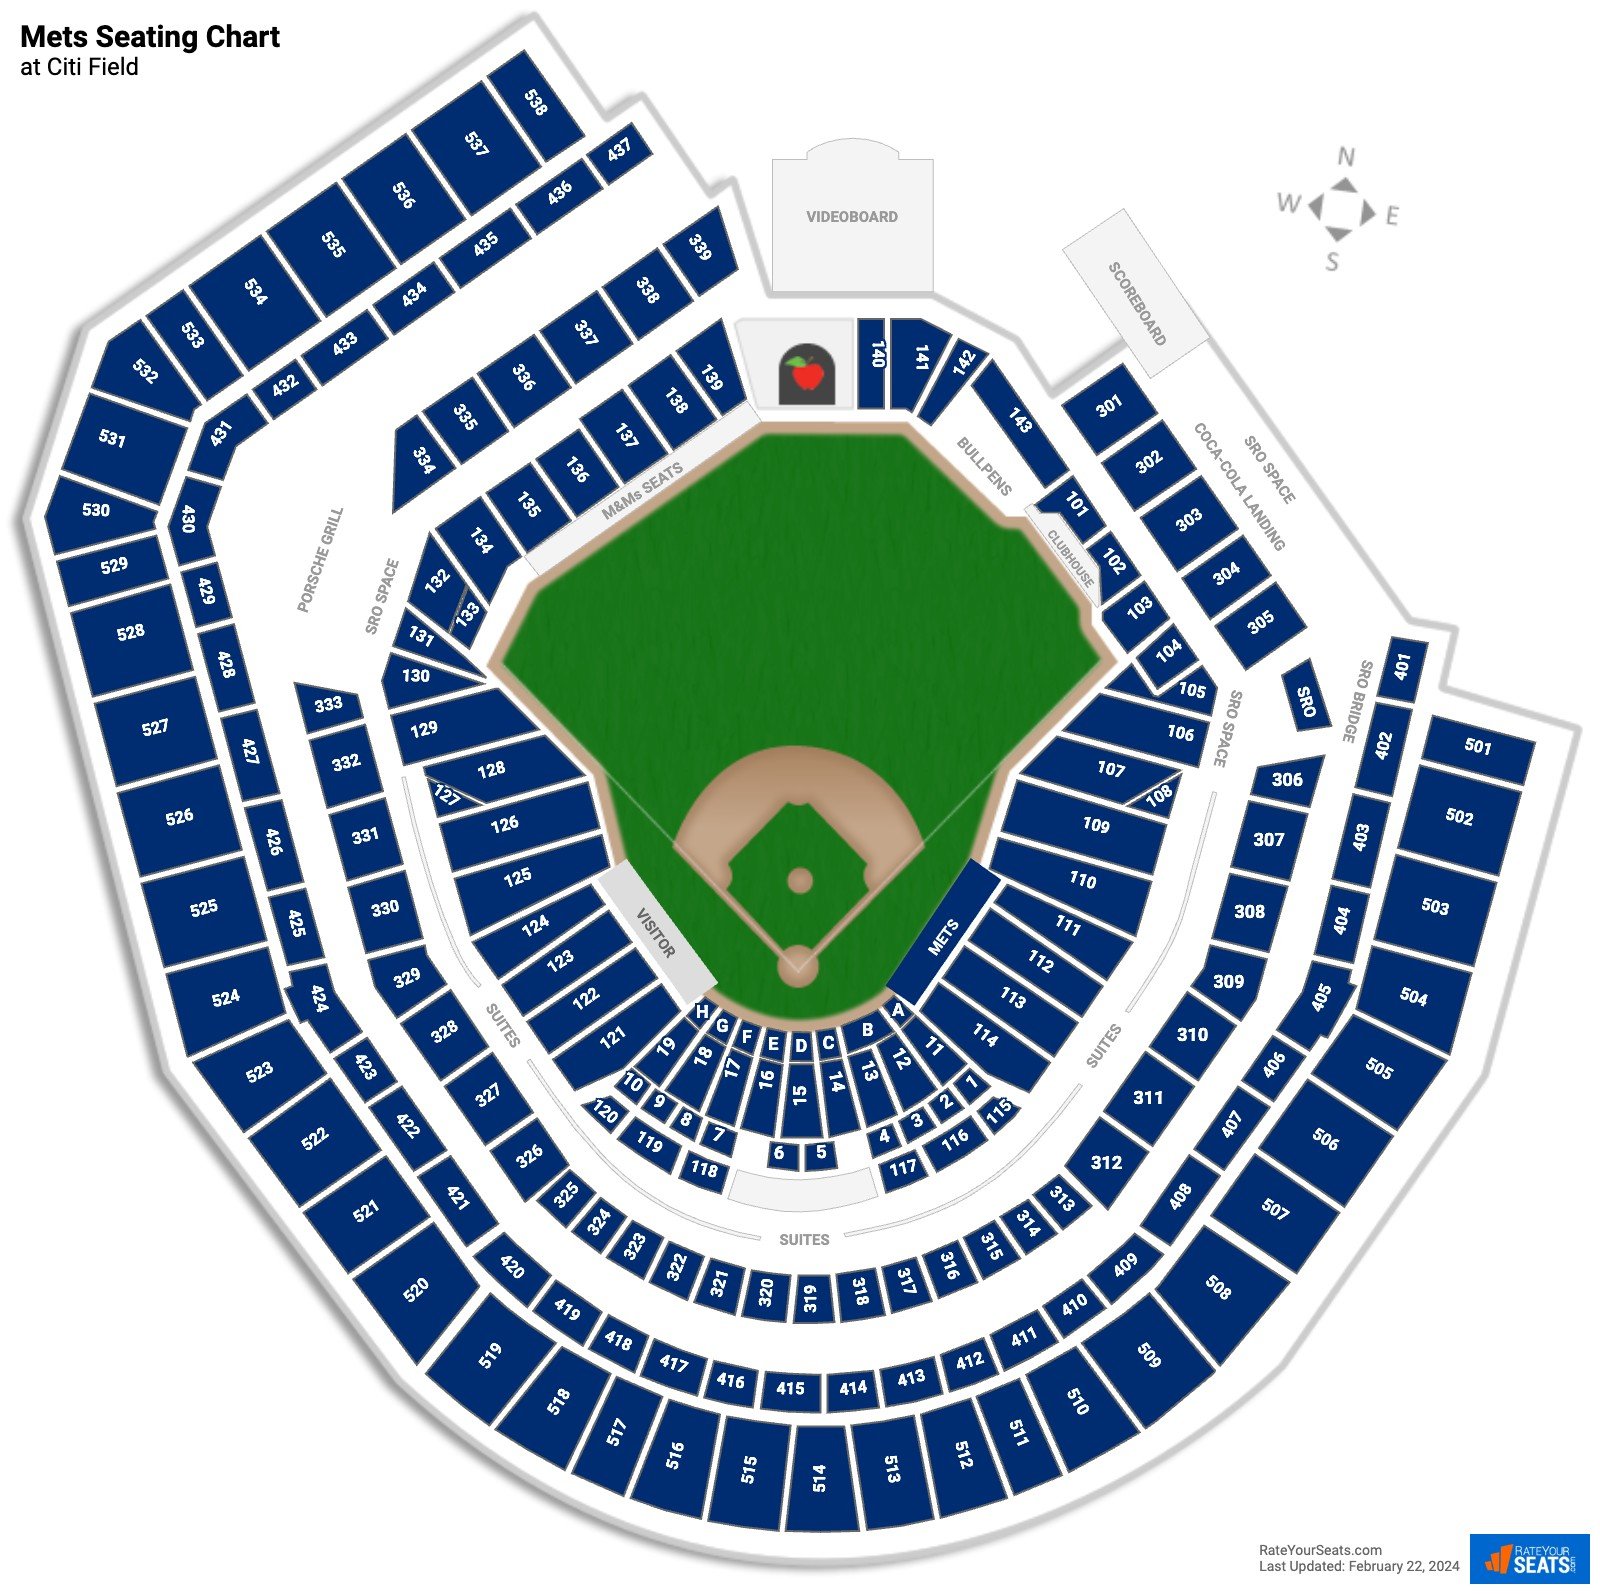 New York Mets Seating Chart at Citi Field